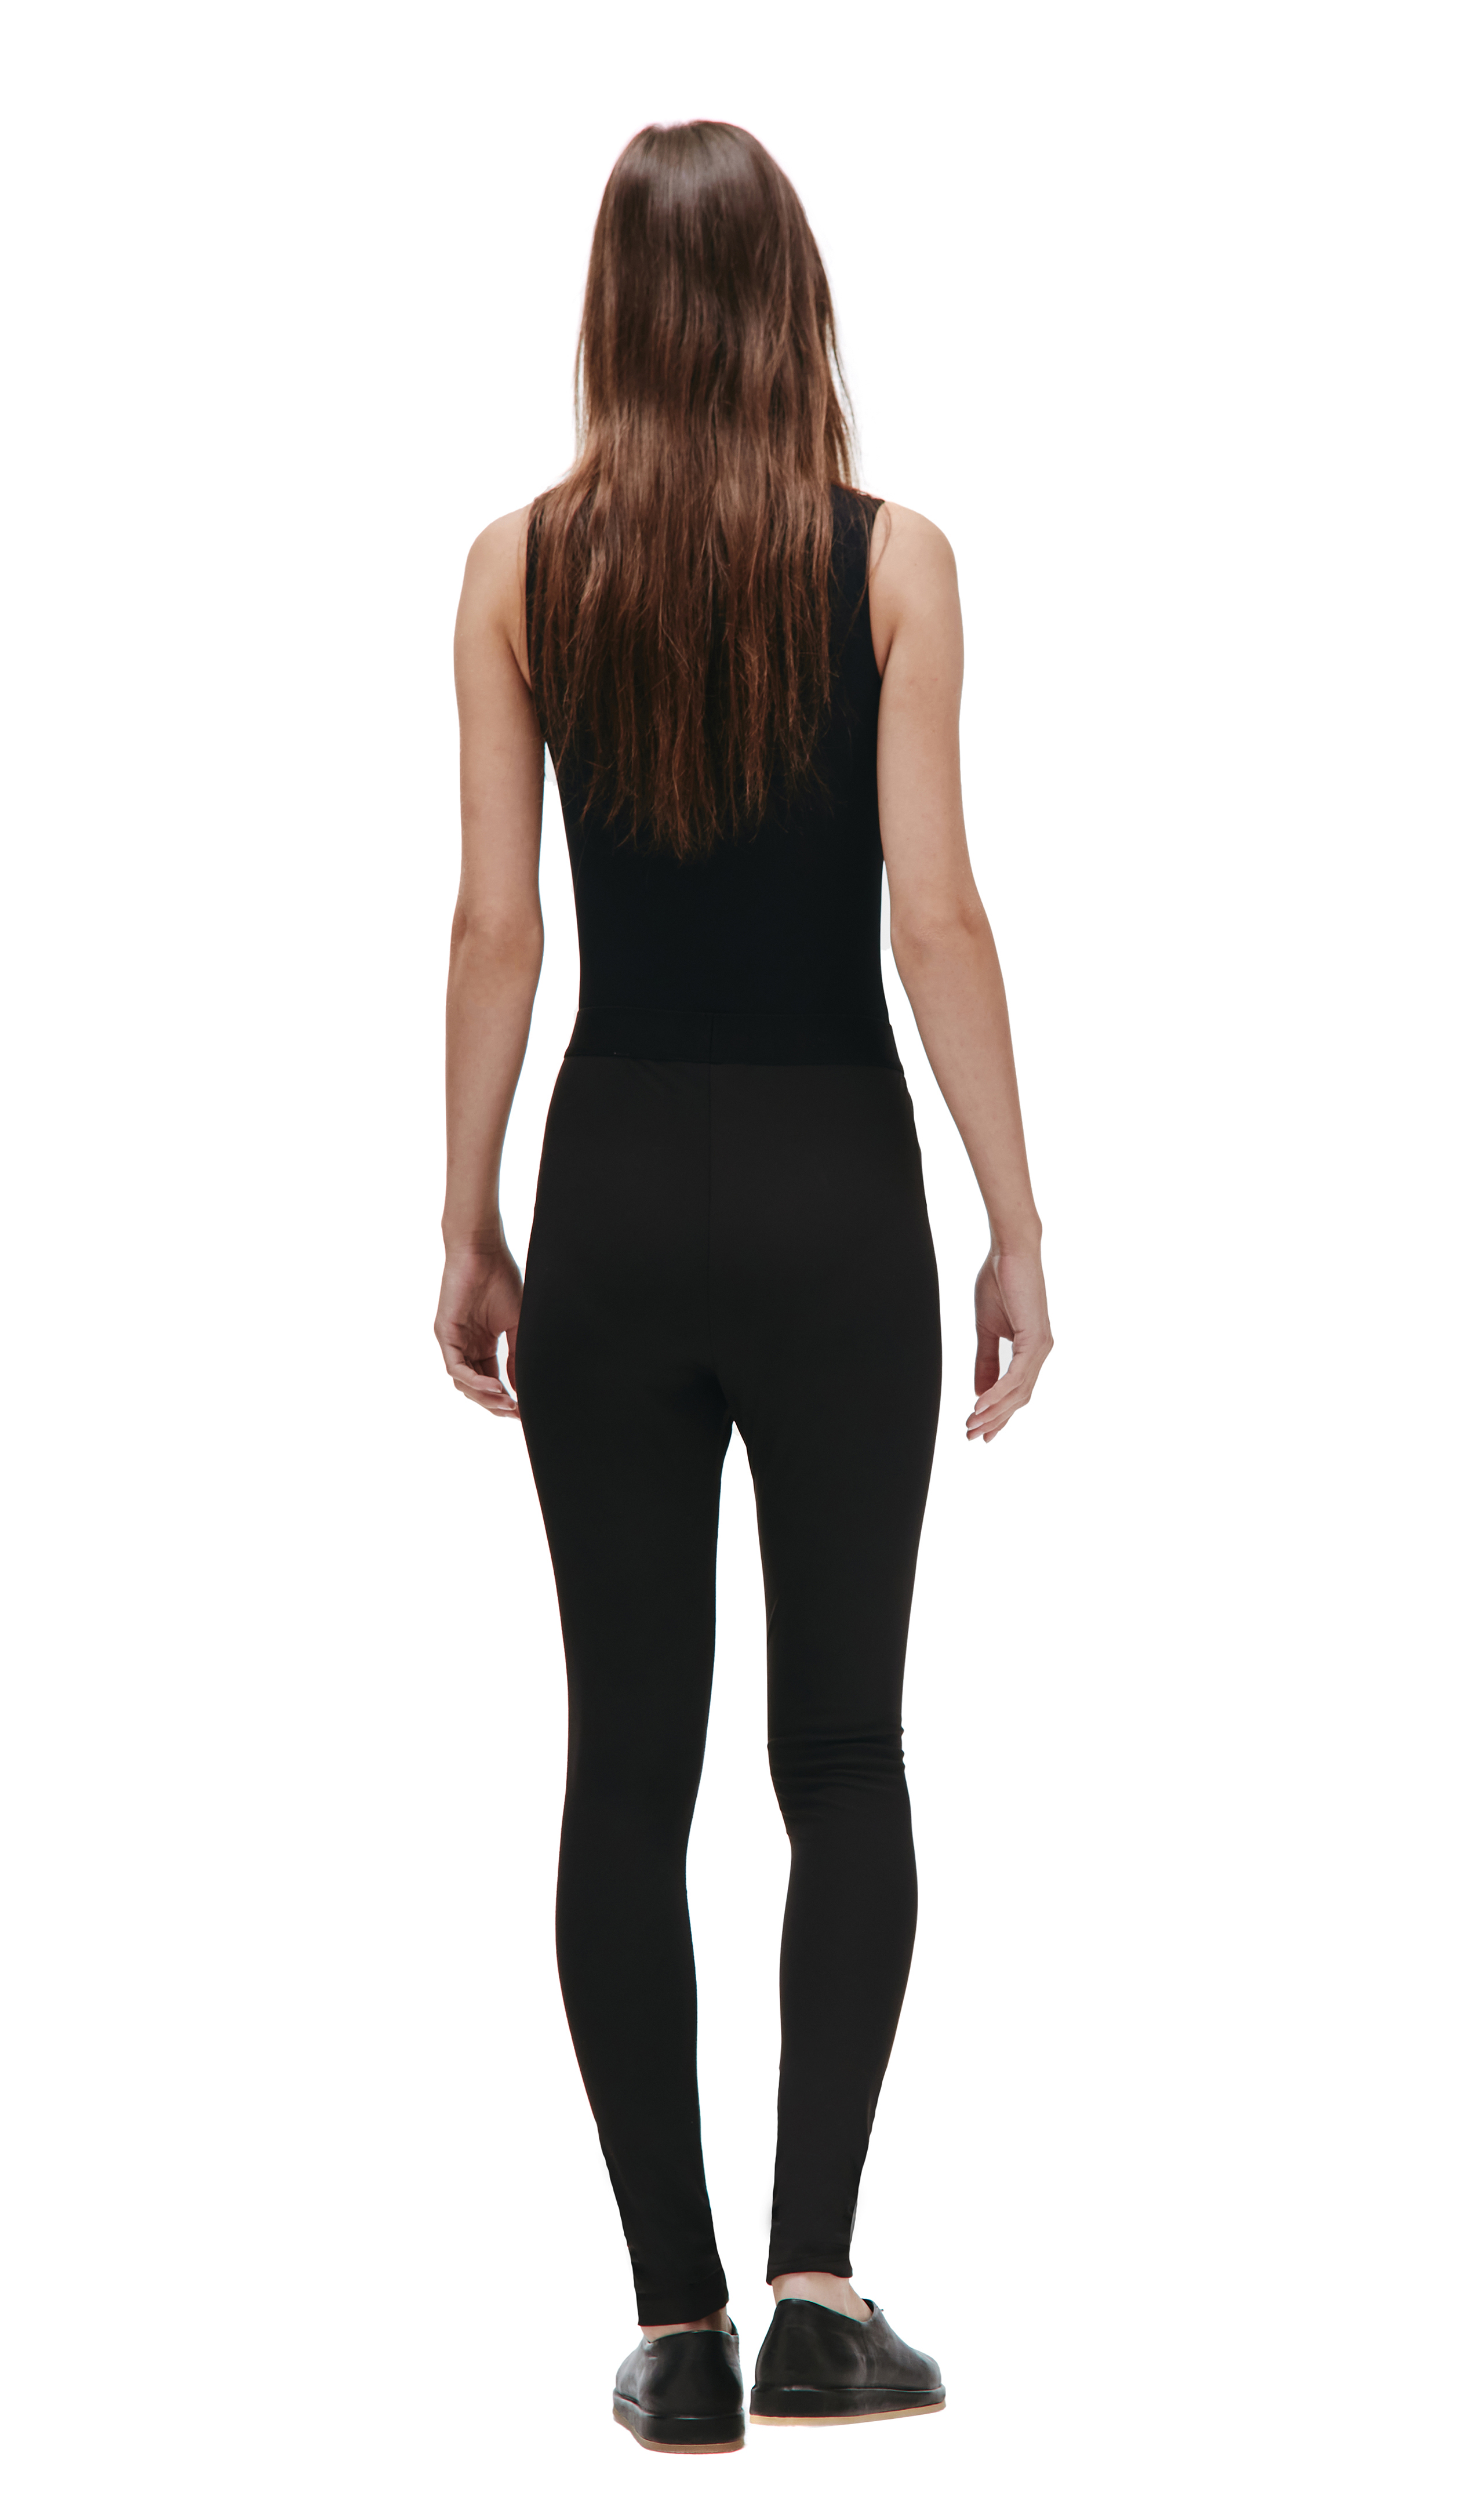 Buy Fear of God Essentials women athletic legging in black for